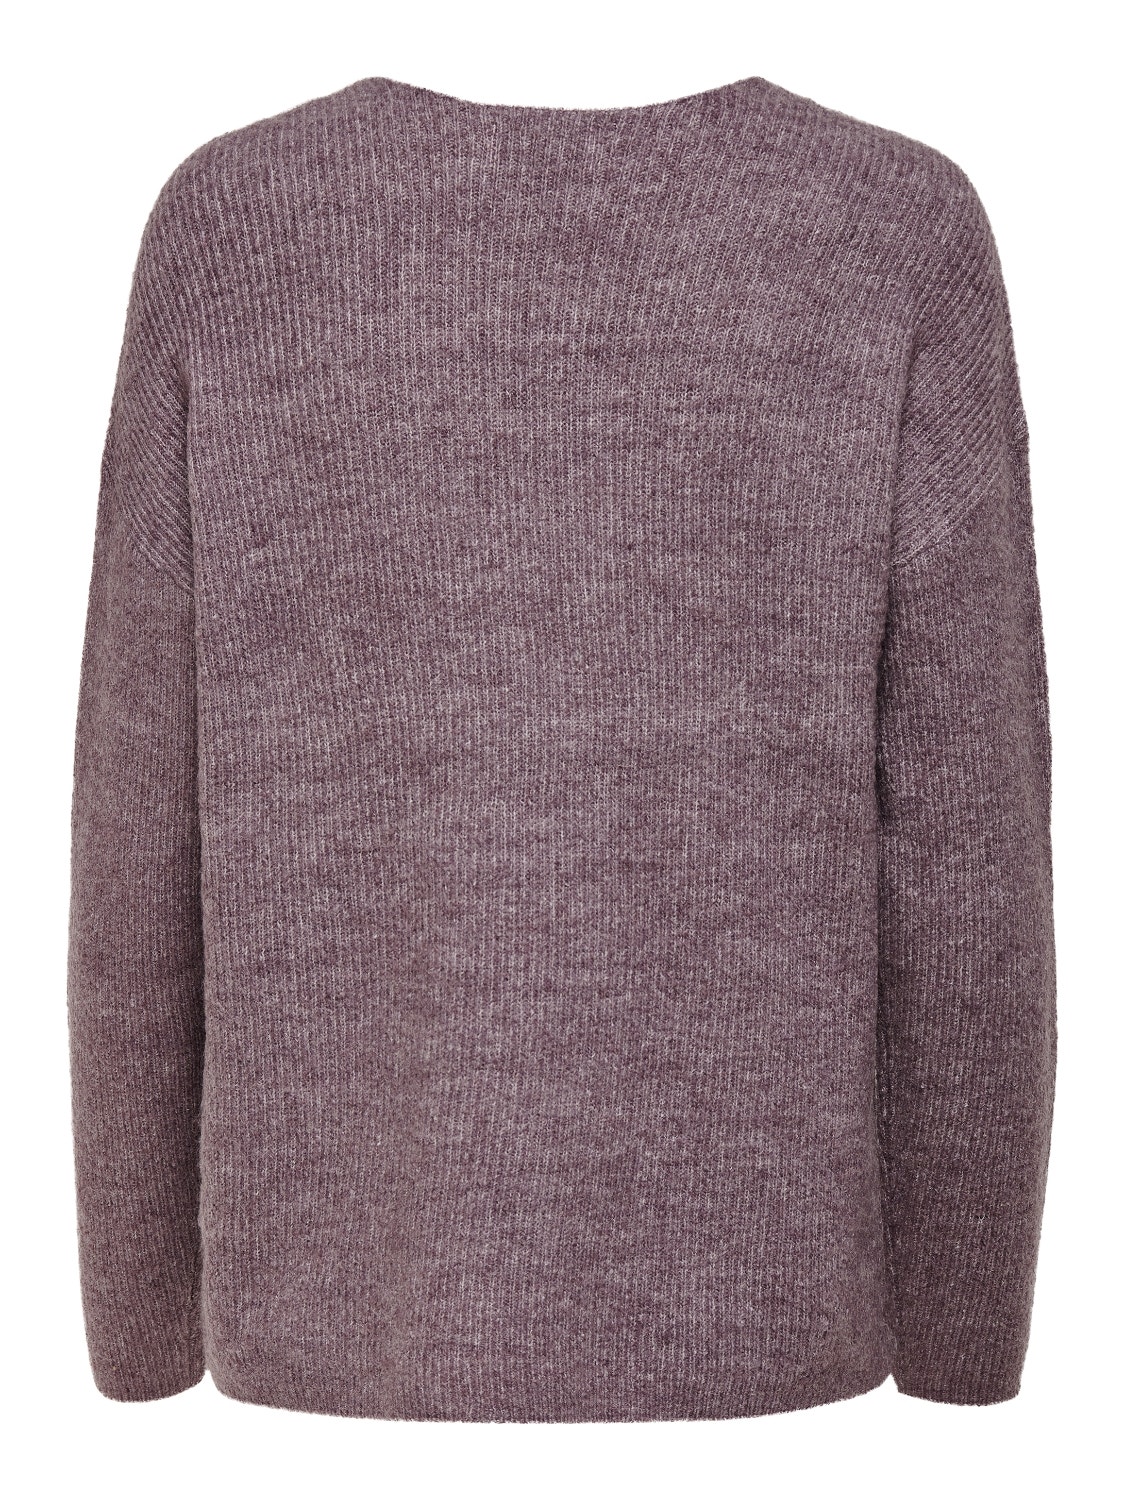 ONLY V-neck Knitted Pullover -Rose Brown - 15204588